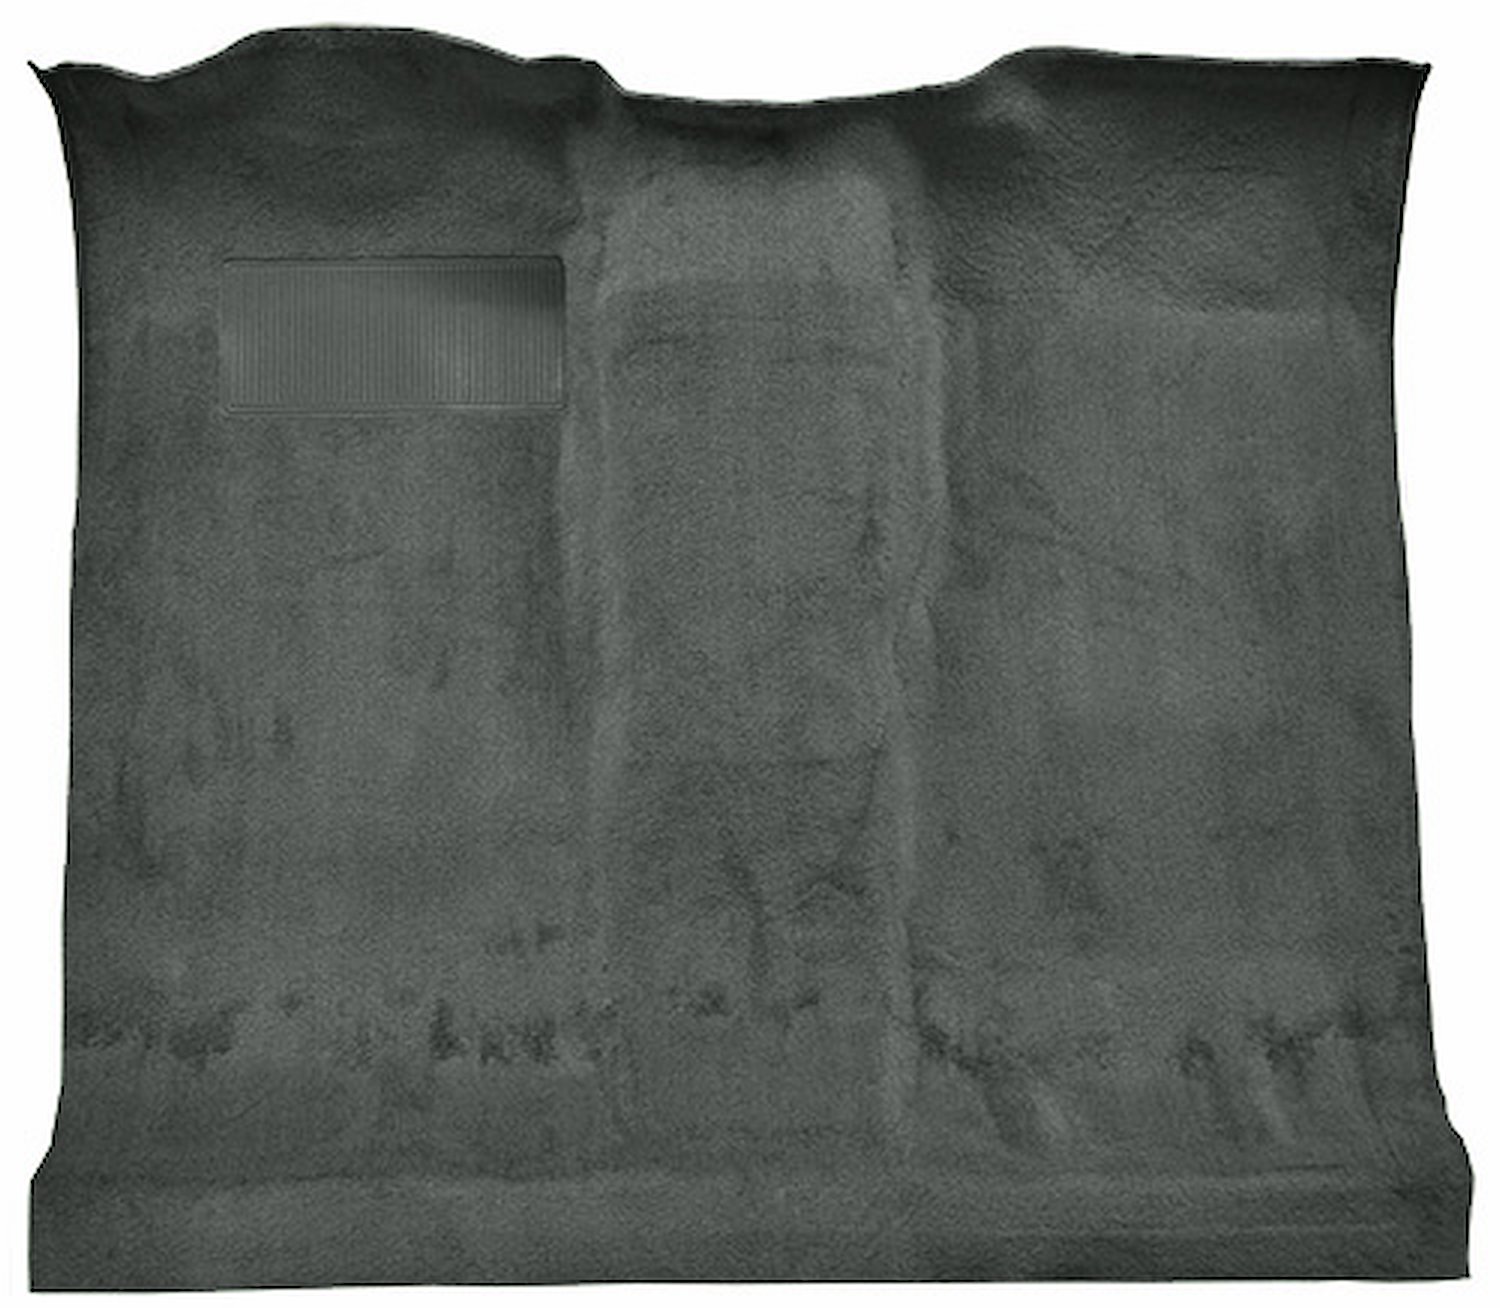 Molded Cut Pile Passenger Area Carpet for 1974-1977 Chevy Blazer, GMC Jimmy [Mass Backing, 1-Piece, Dark Gray]